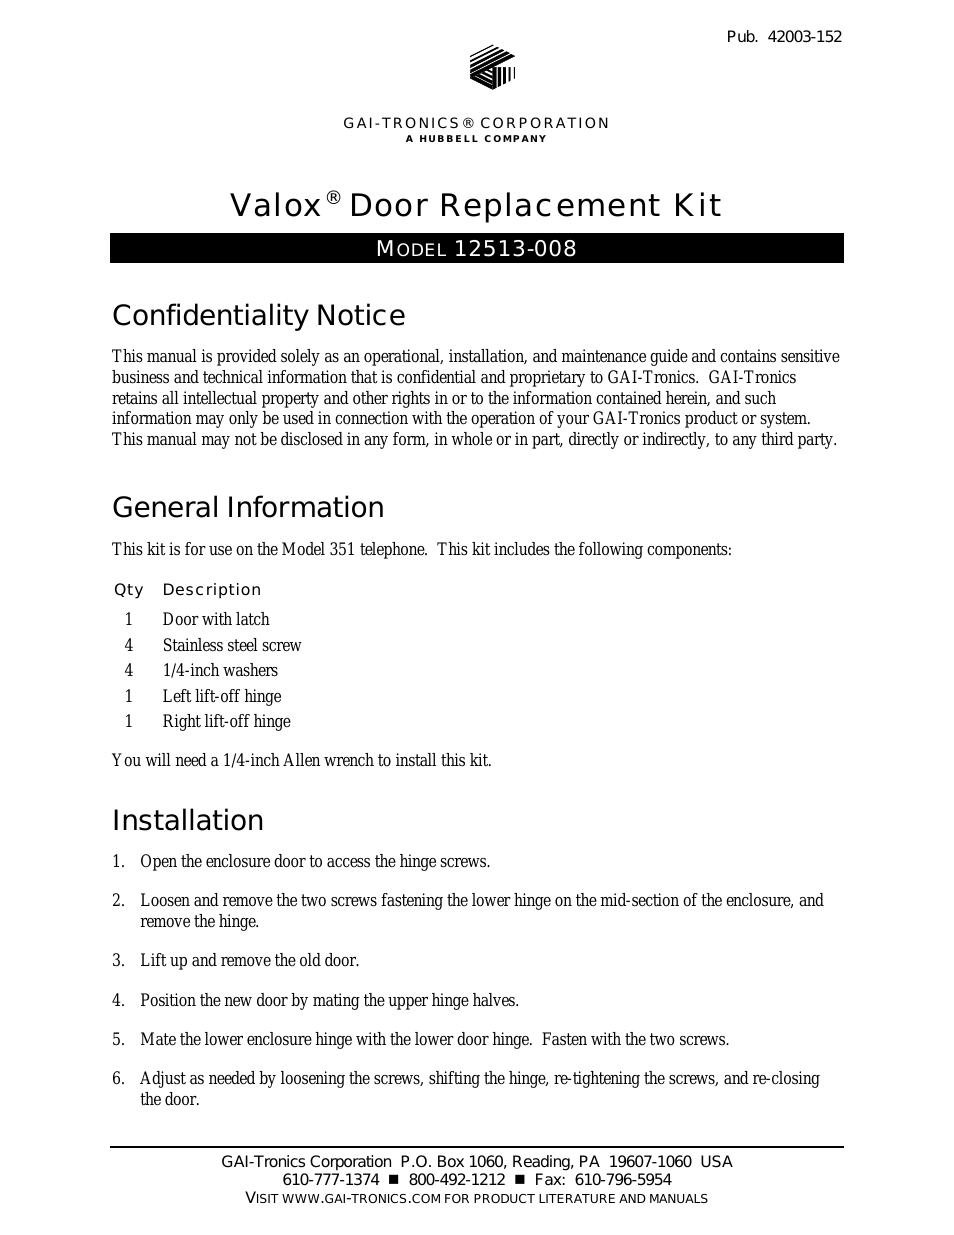 12513-008 Valox Door Kit - 351